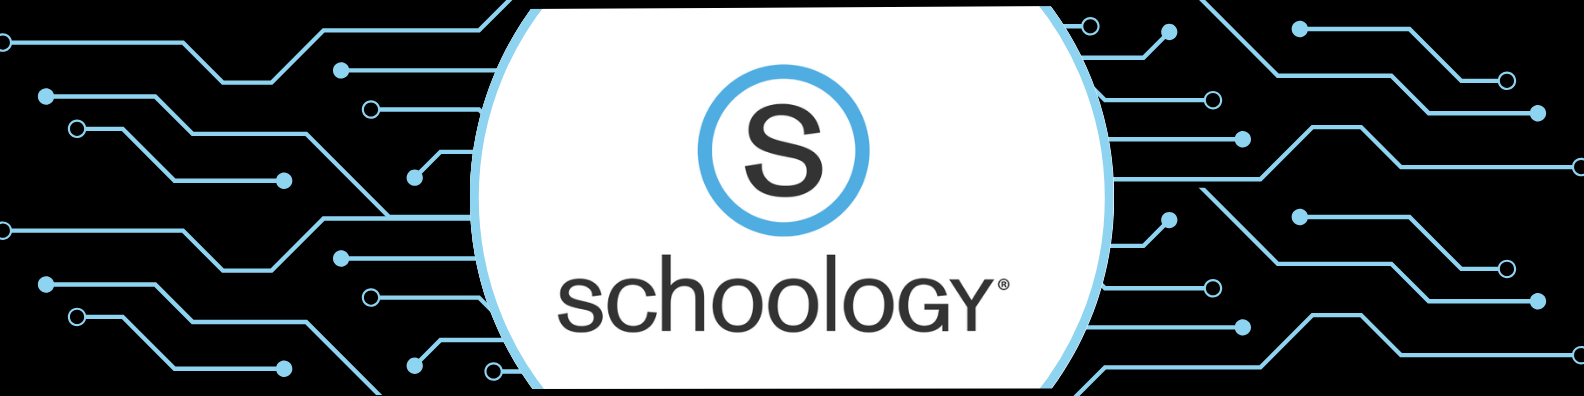 Schoology banner